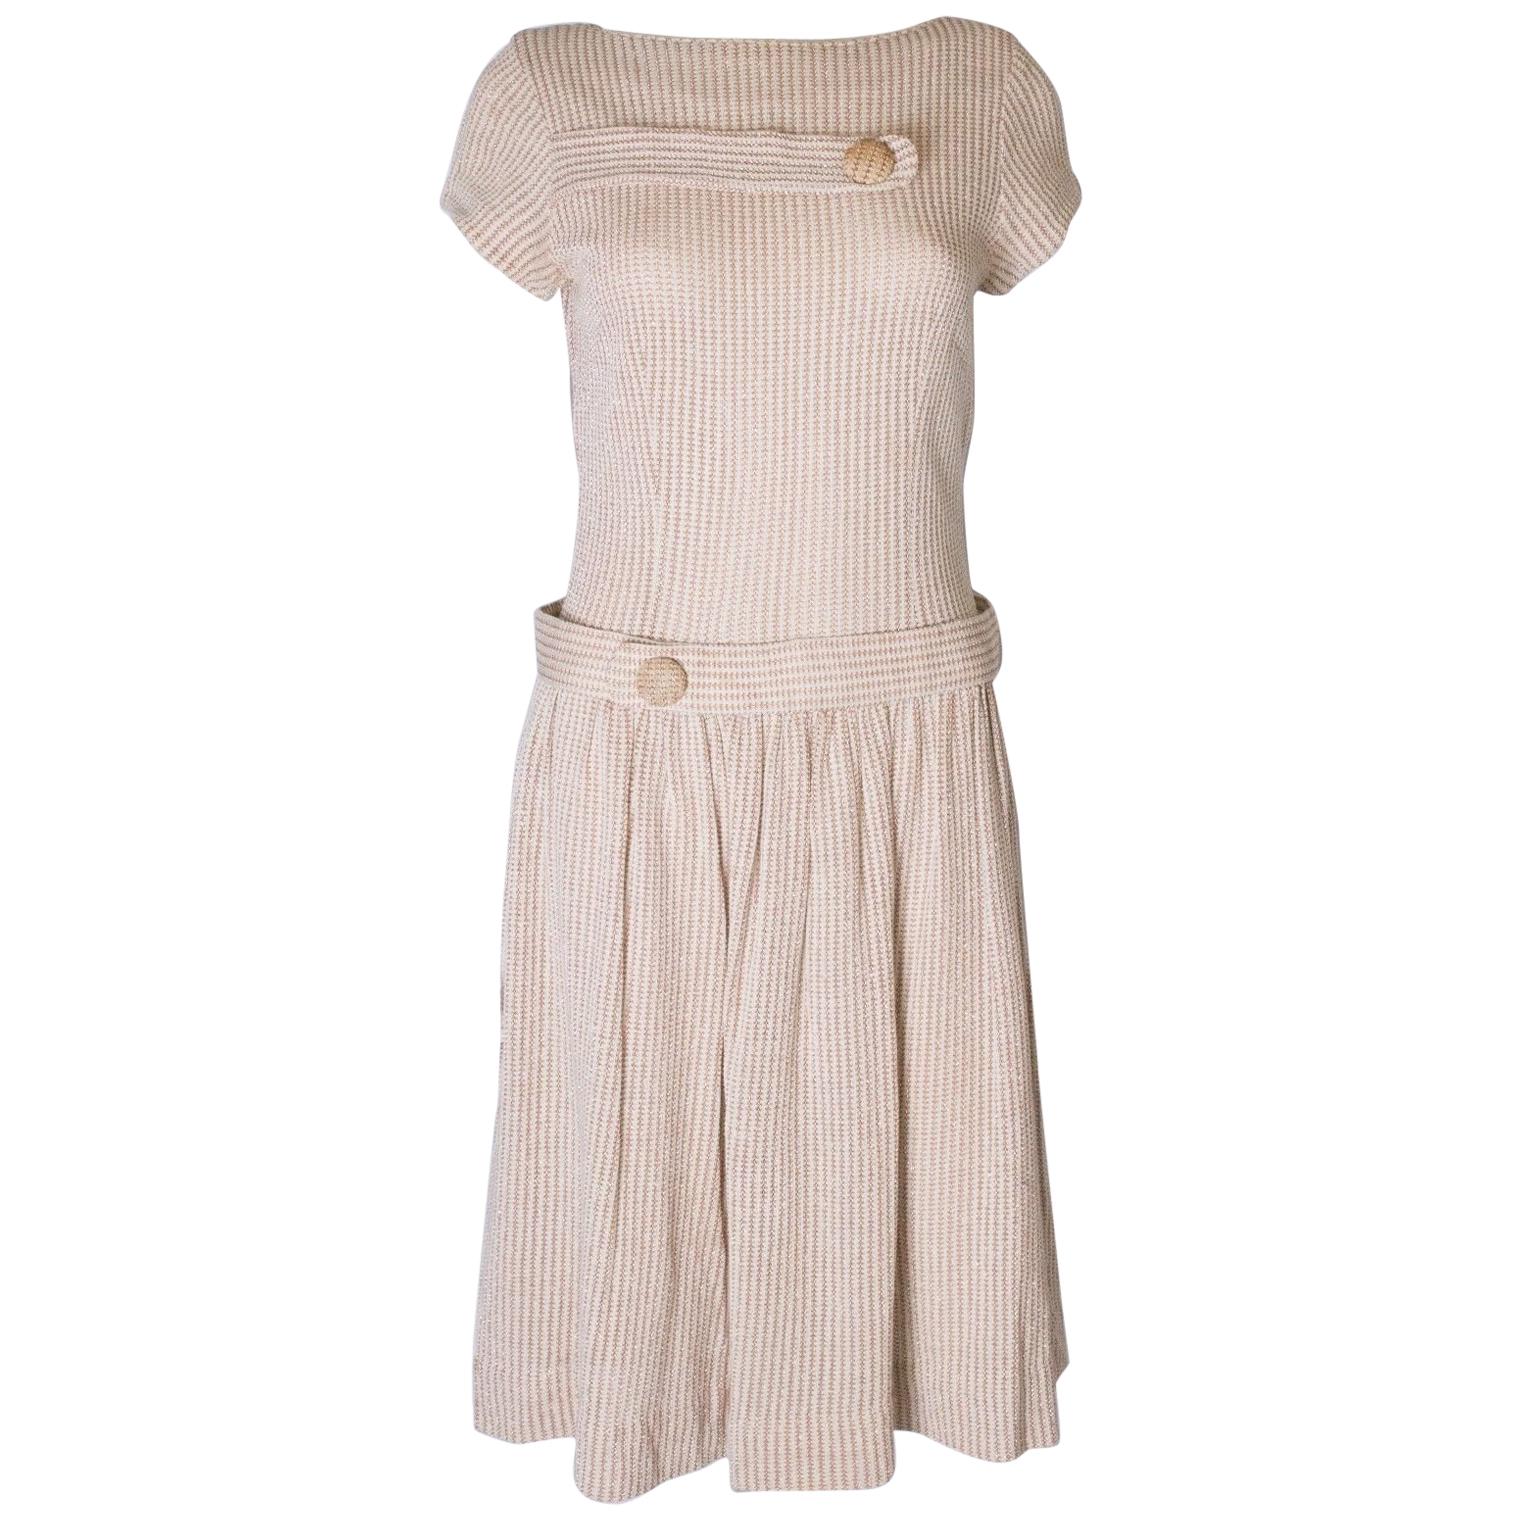 A vintage 1950s cream knitted drop waist glitter thread dress size S Small 